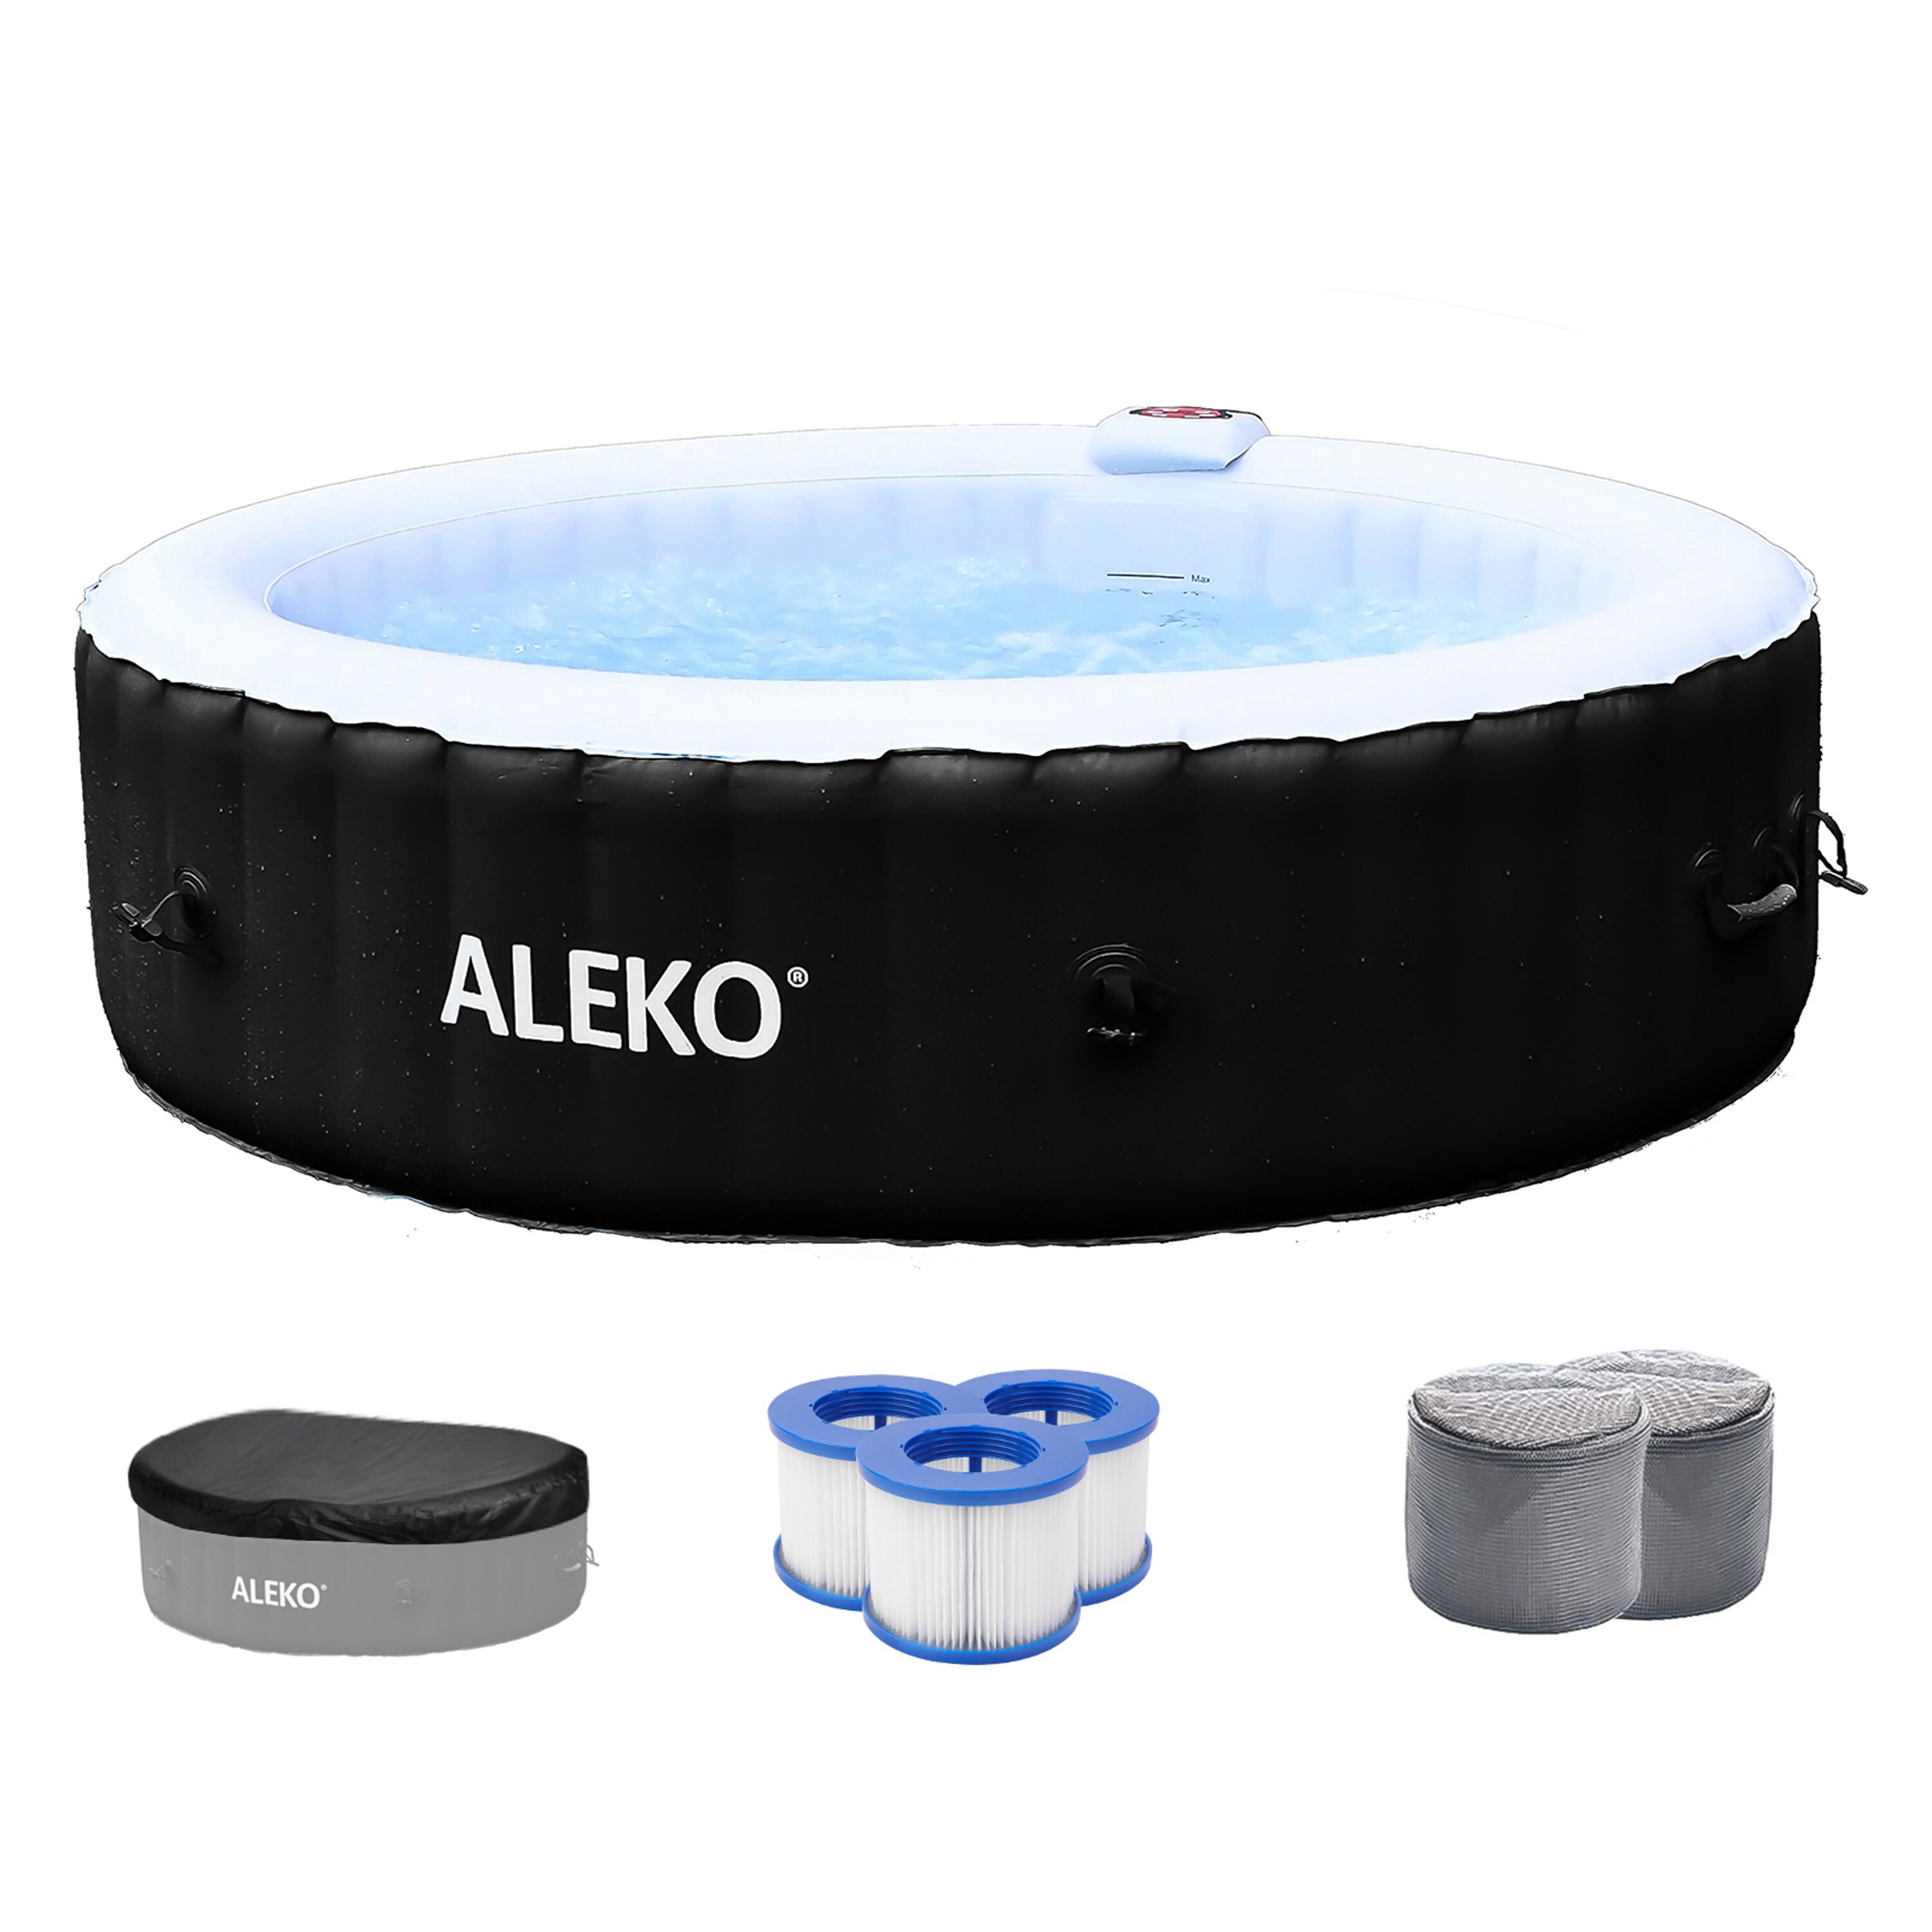 ALEKO Hot Tubs - Bed Bath & Beyond